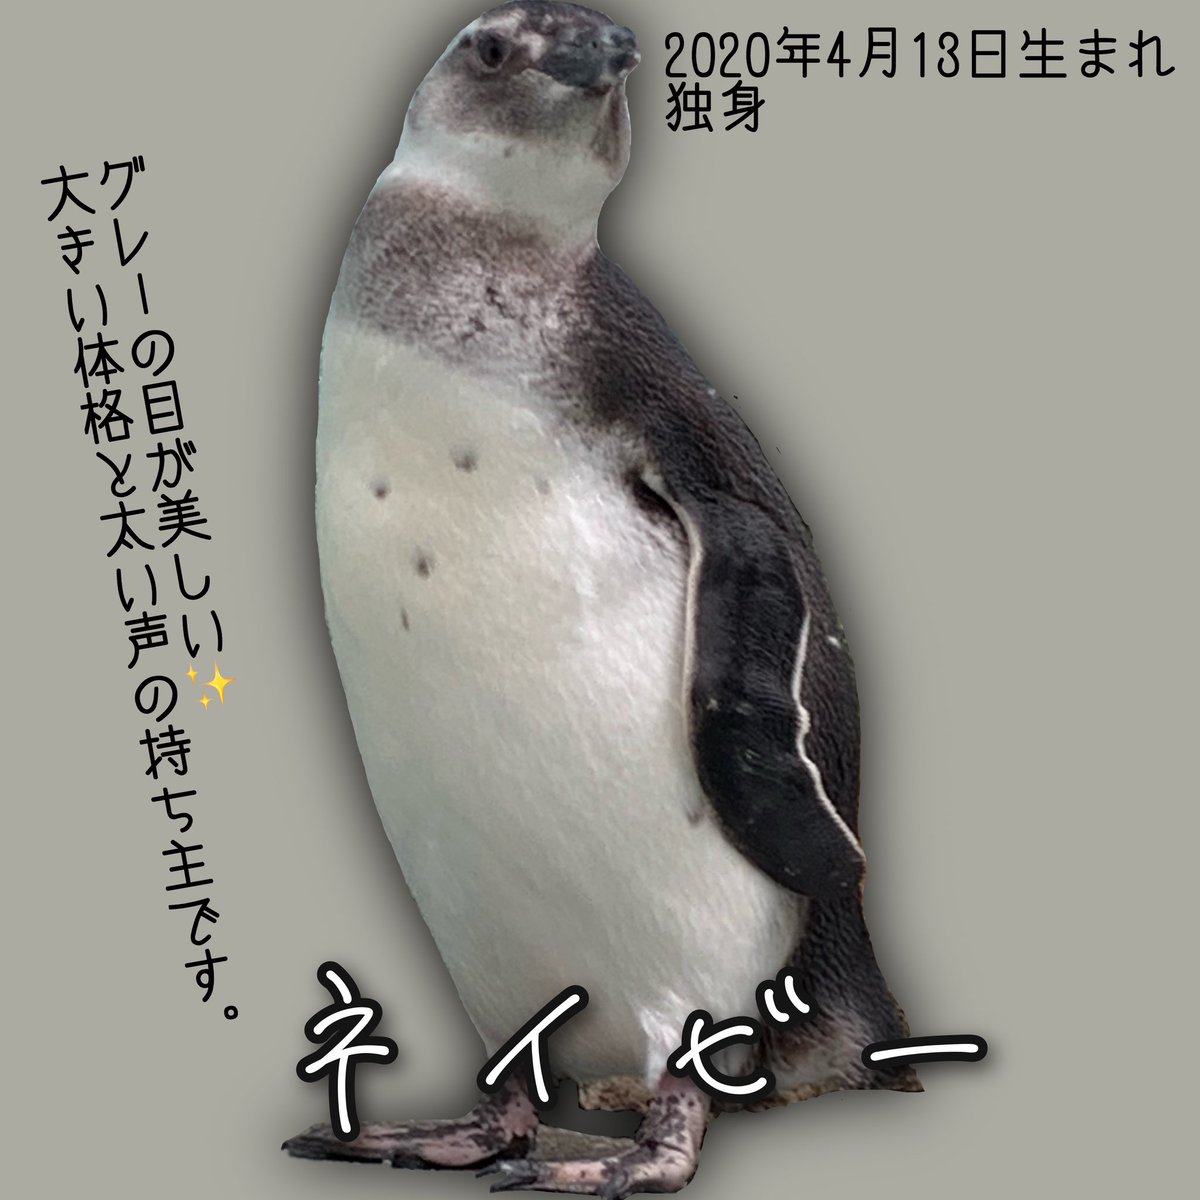 utsunomiya_zoo tweet picture